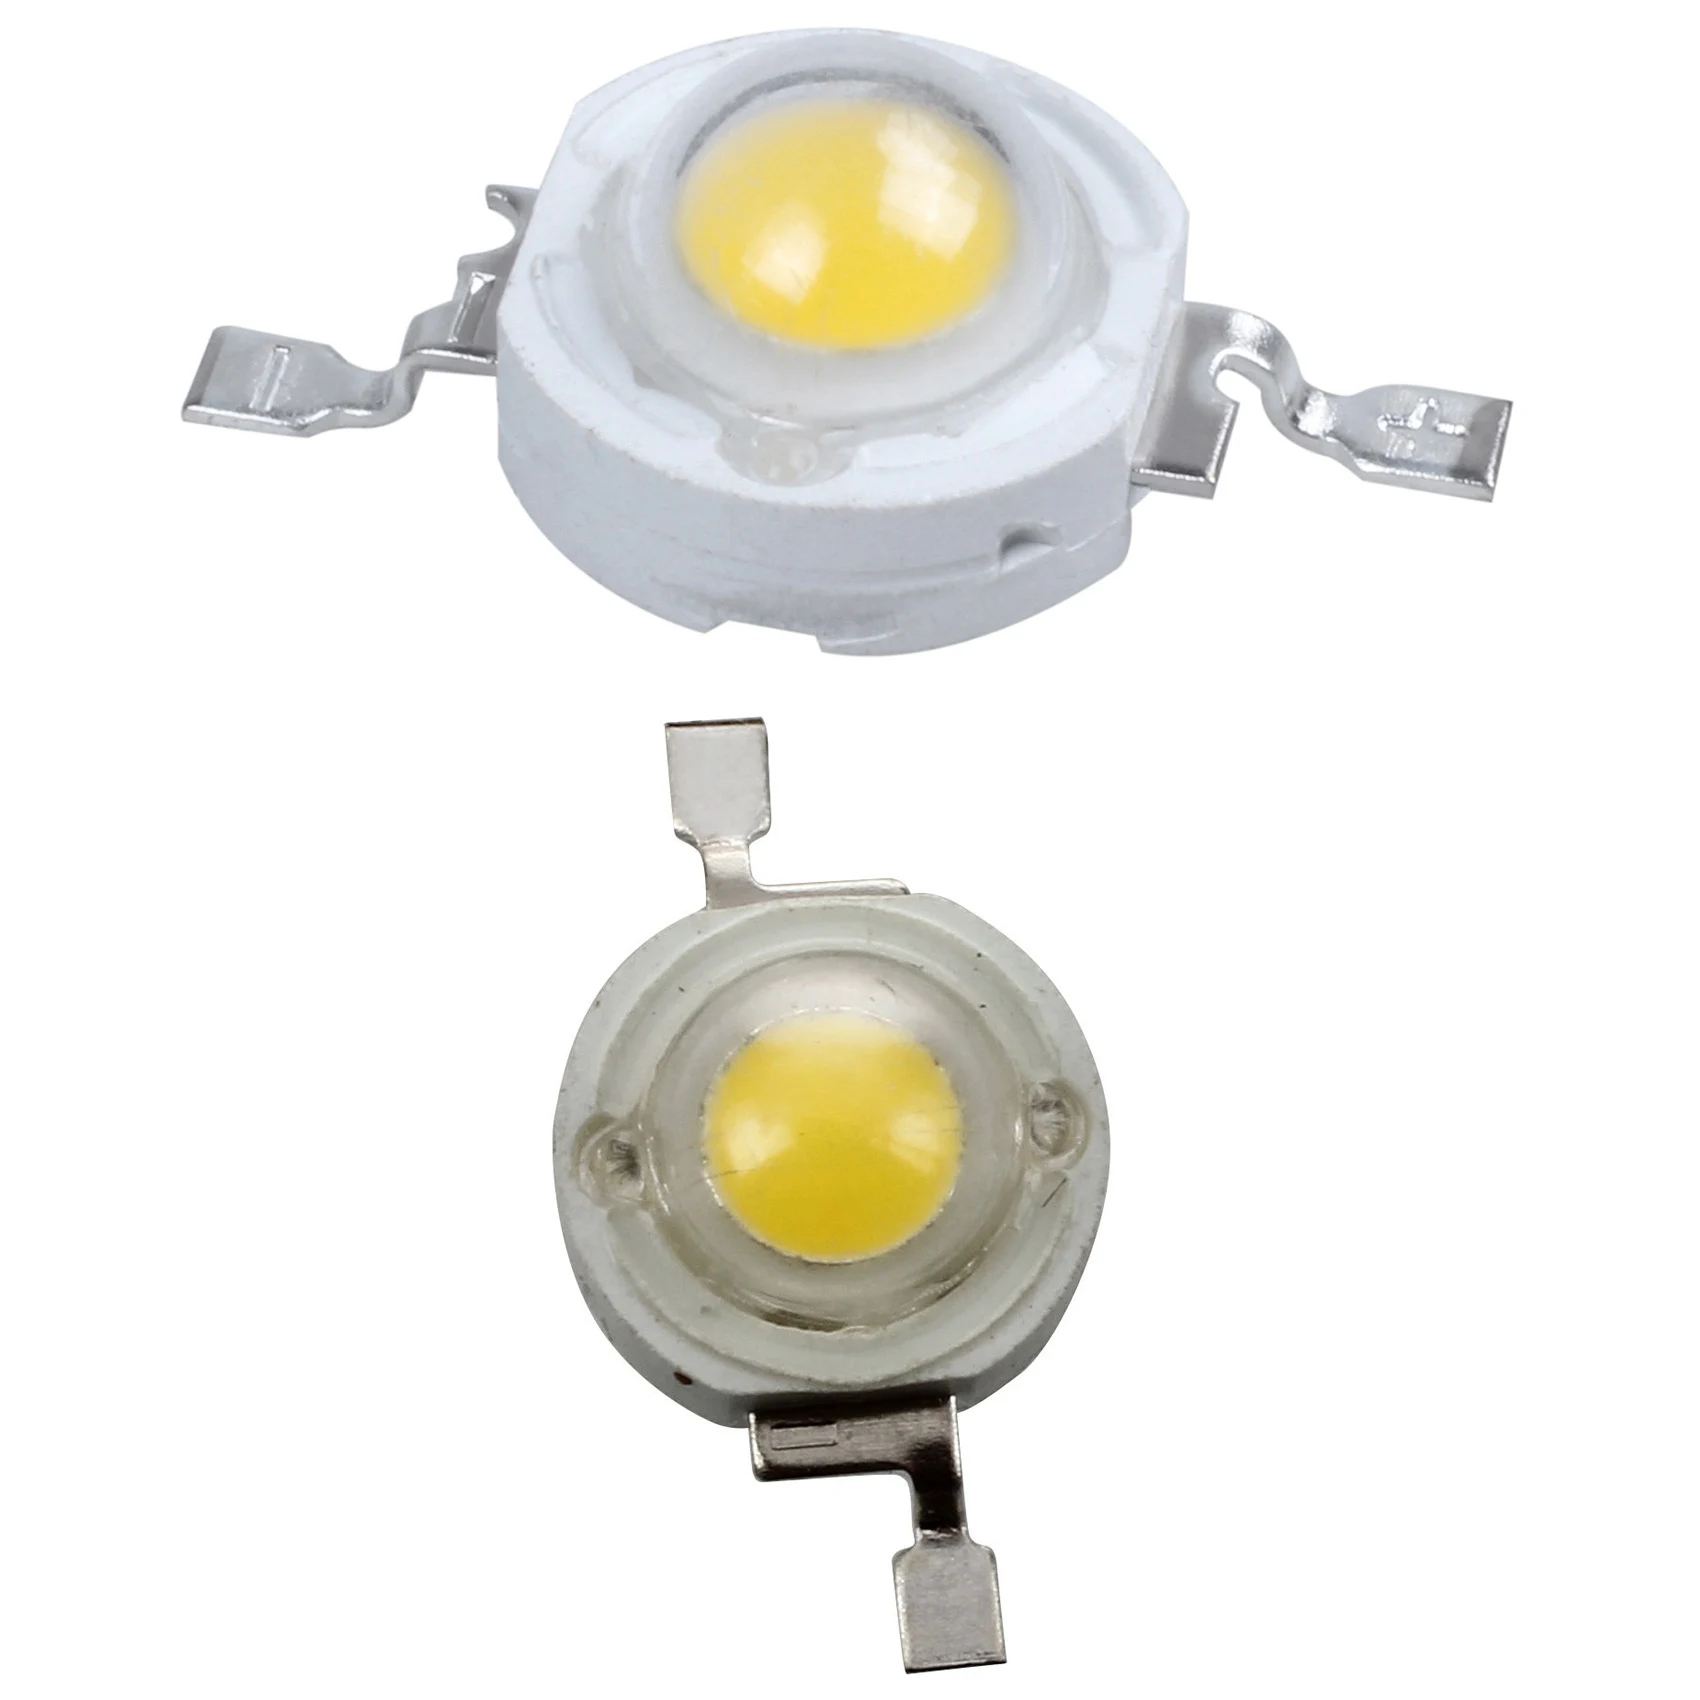 

20Pcs 2 Pin SMD 1W 3-3.2V Warm White LED Light Emitter Bulb with 10Pcs 2 Pin 3W Warm White LED Bead Emitters 100-110Lm